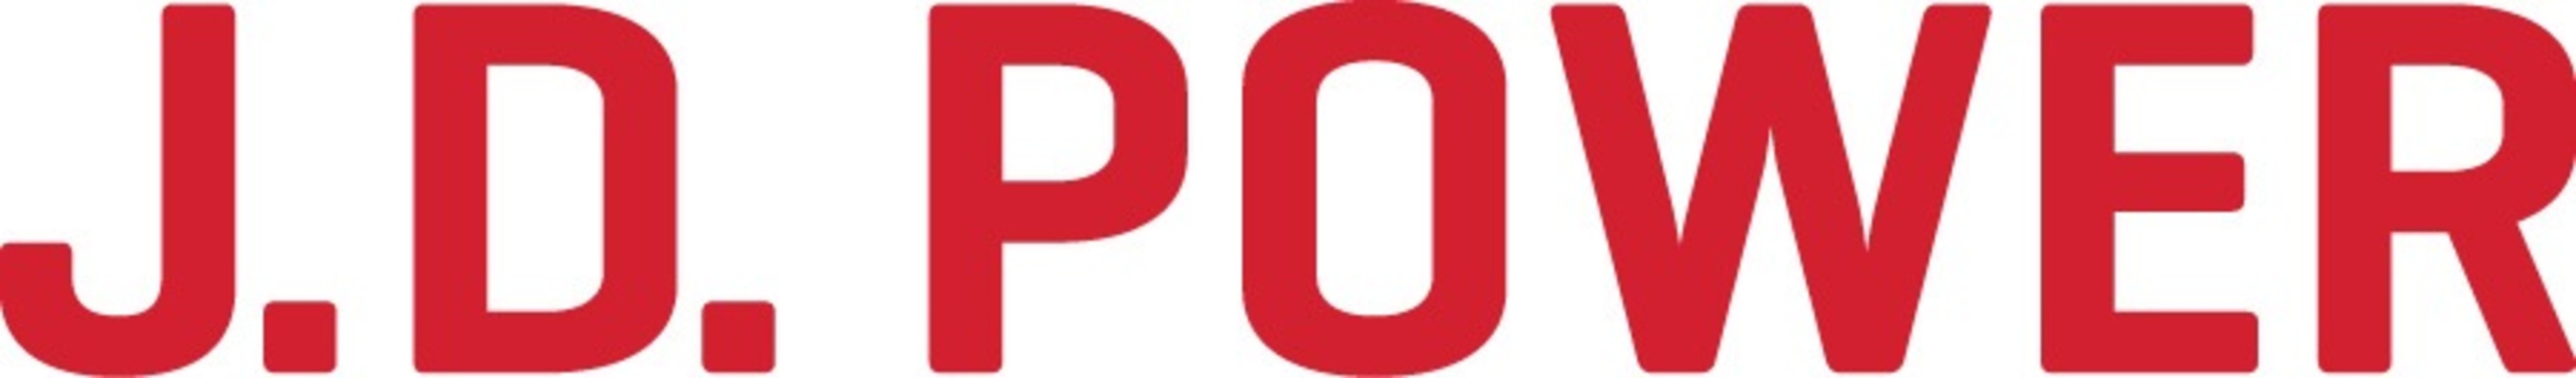 J.D. Power corporate logo